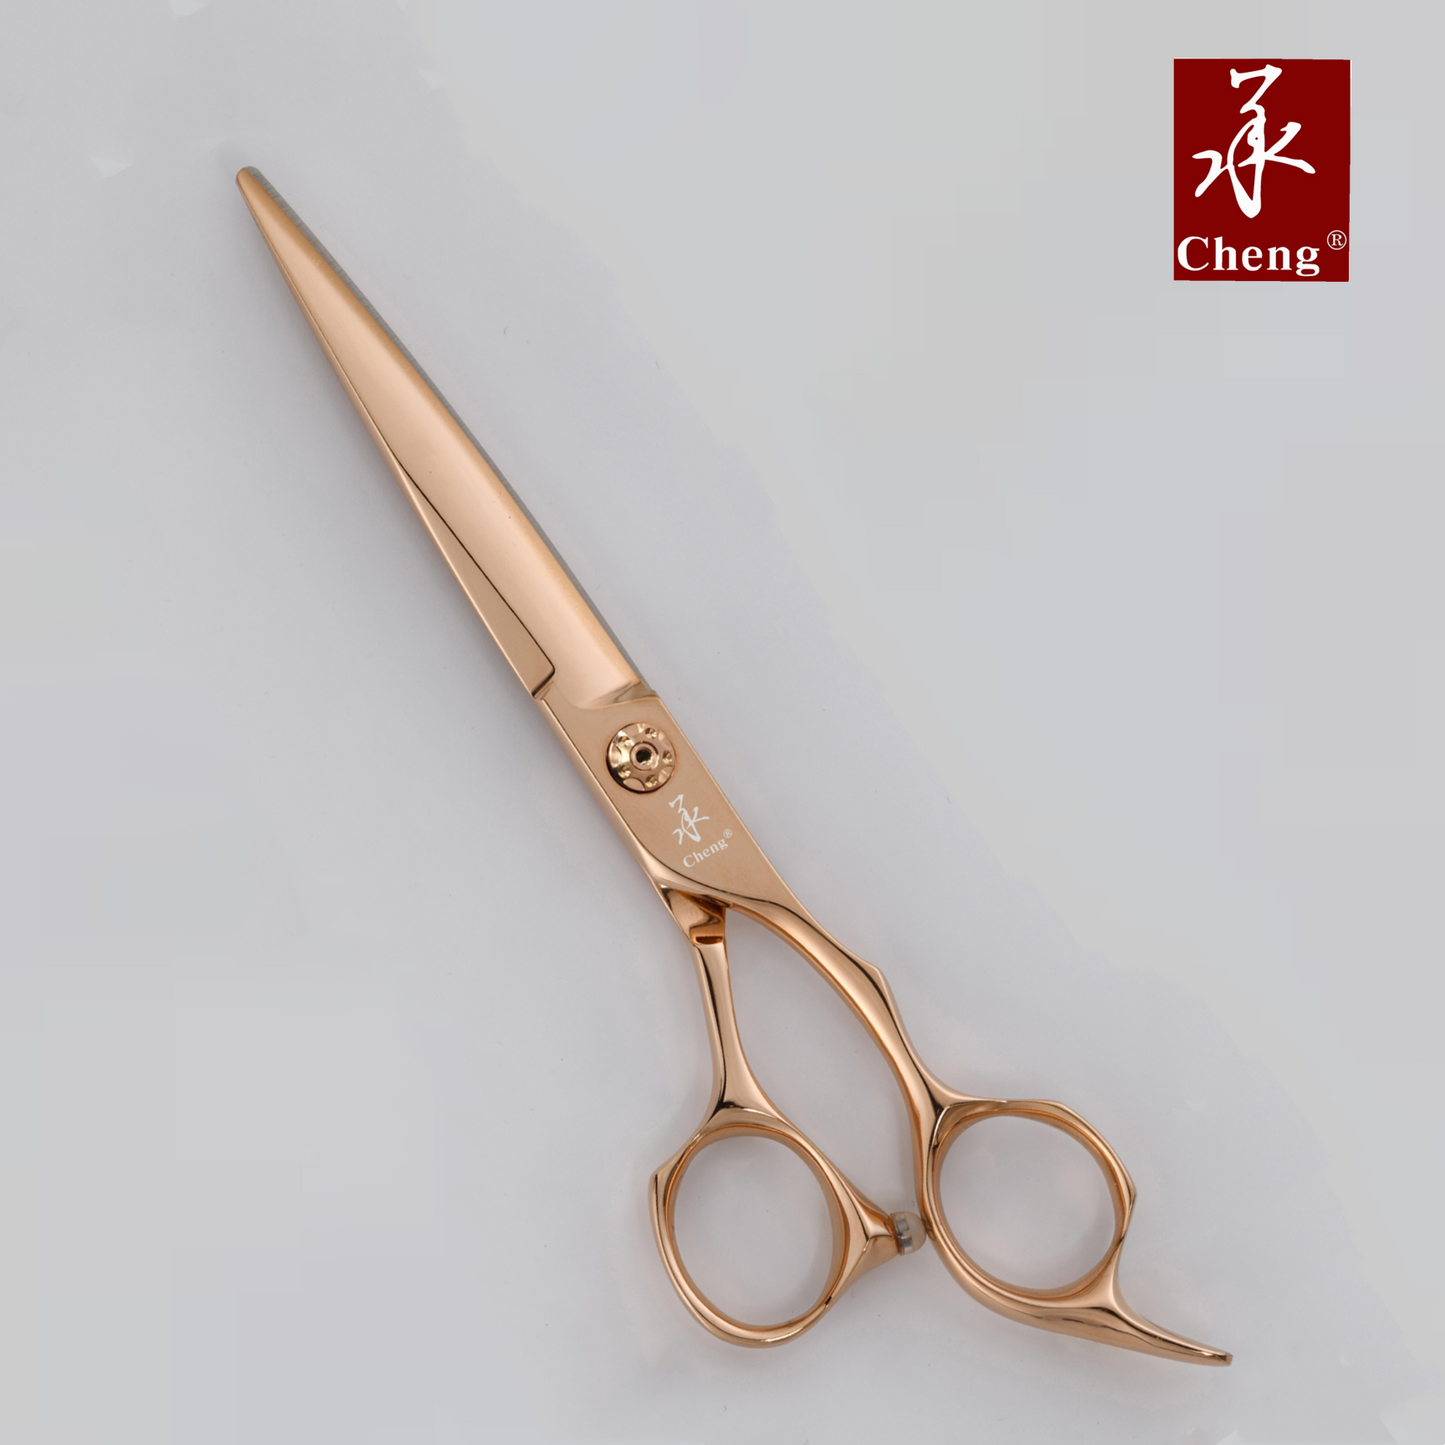 A1-6.2BK Hair Cutting Scissors 6.2 Inch